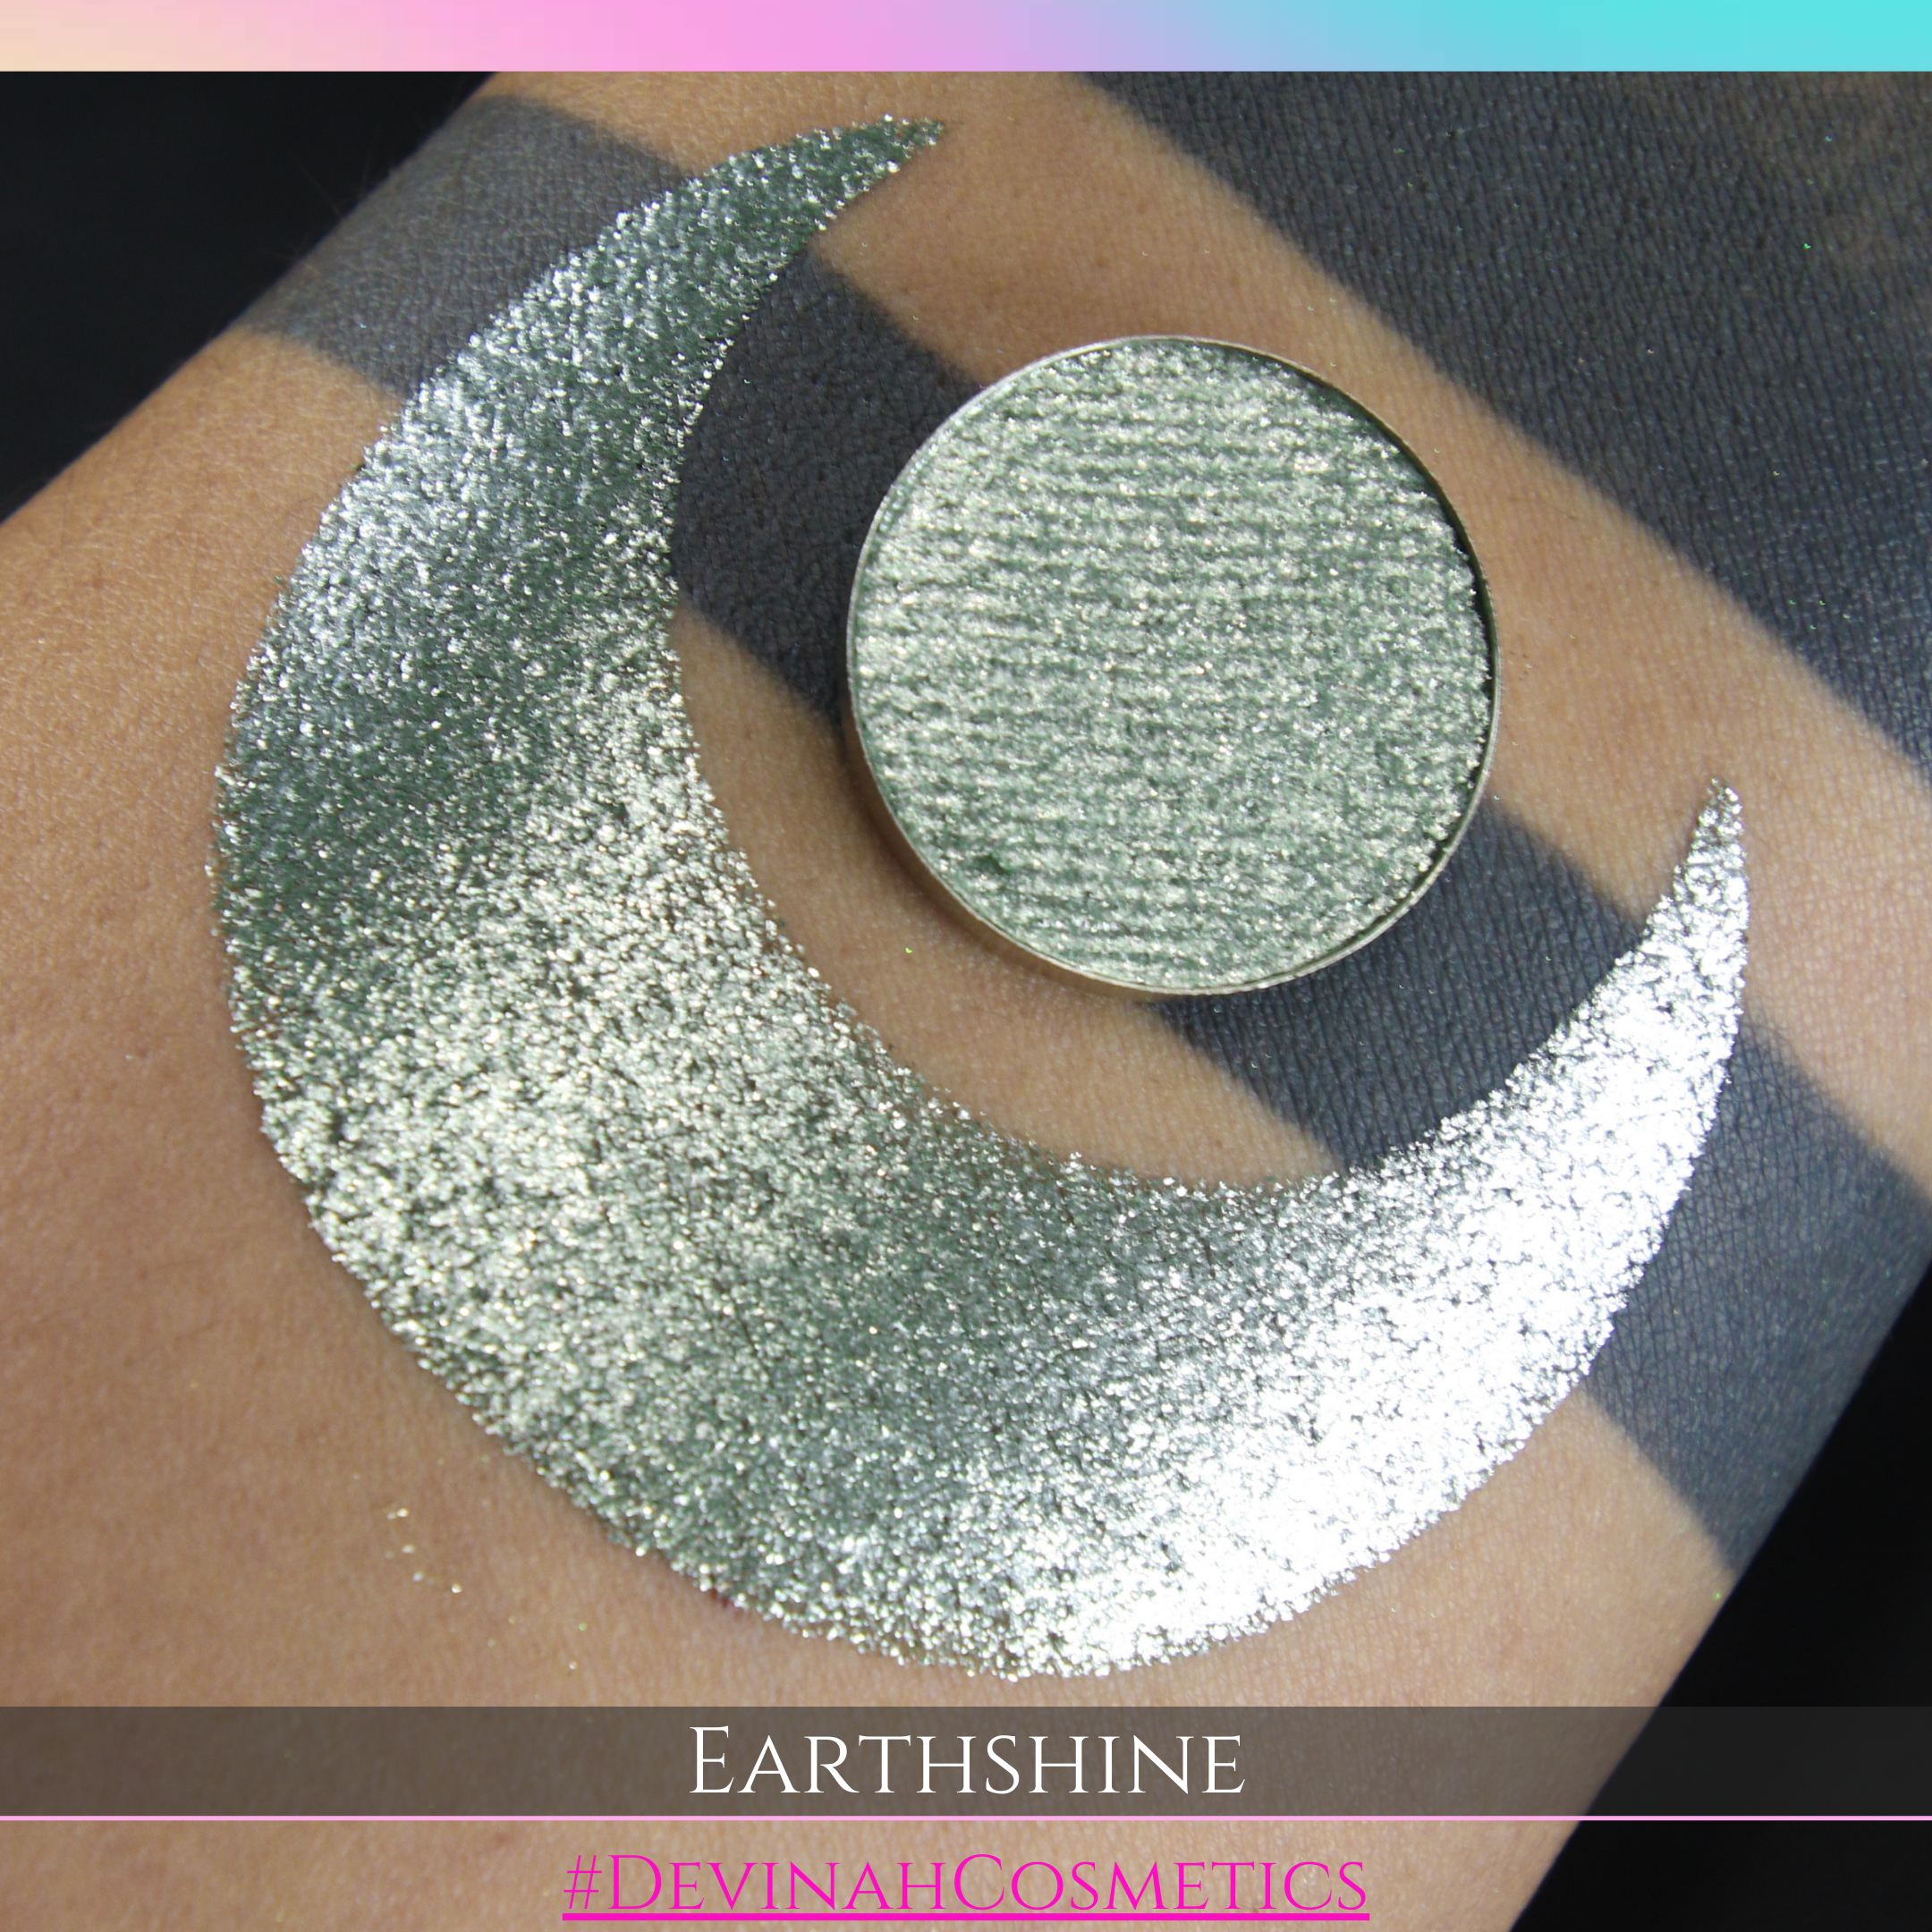 Earthshine mint sea glass green shiny metallic sparkle glitter eyeshsdow